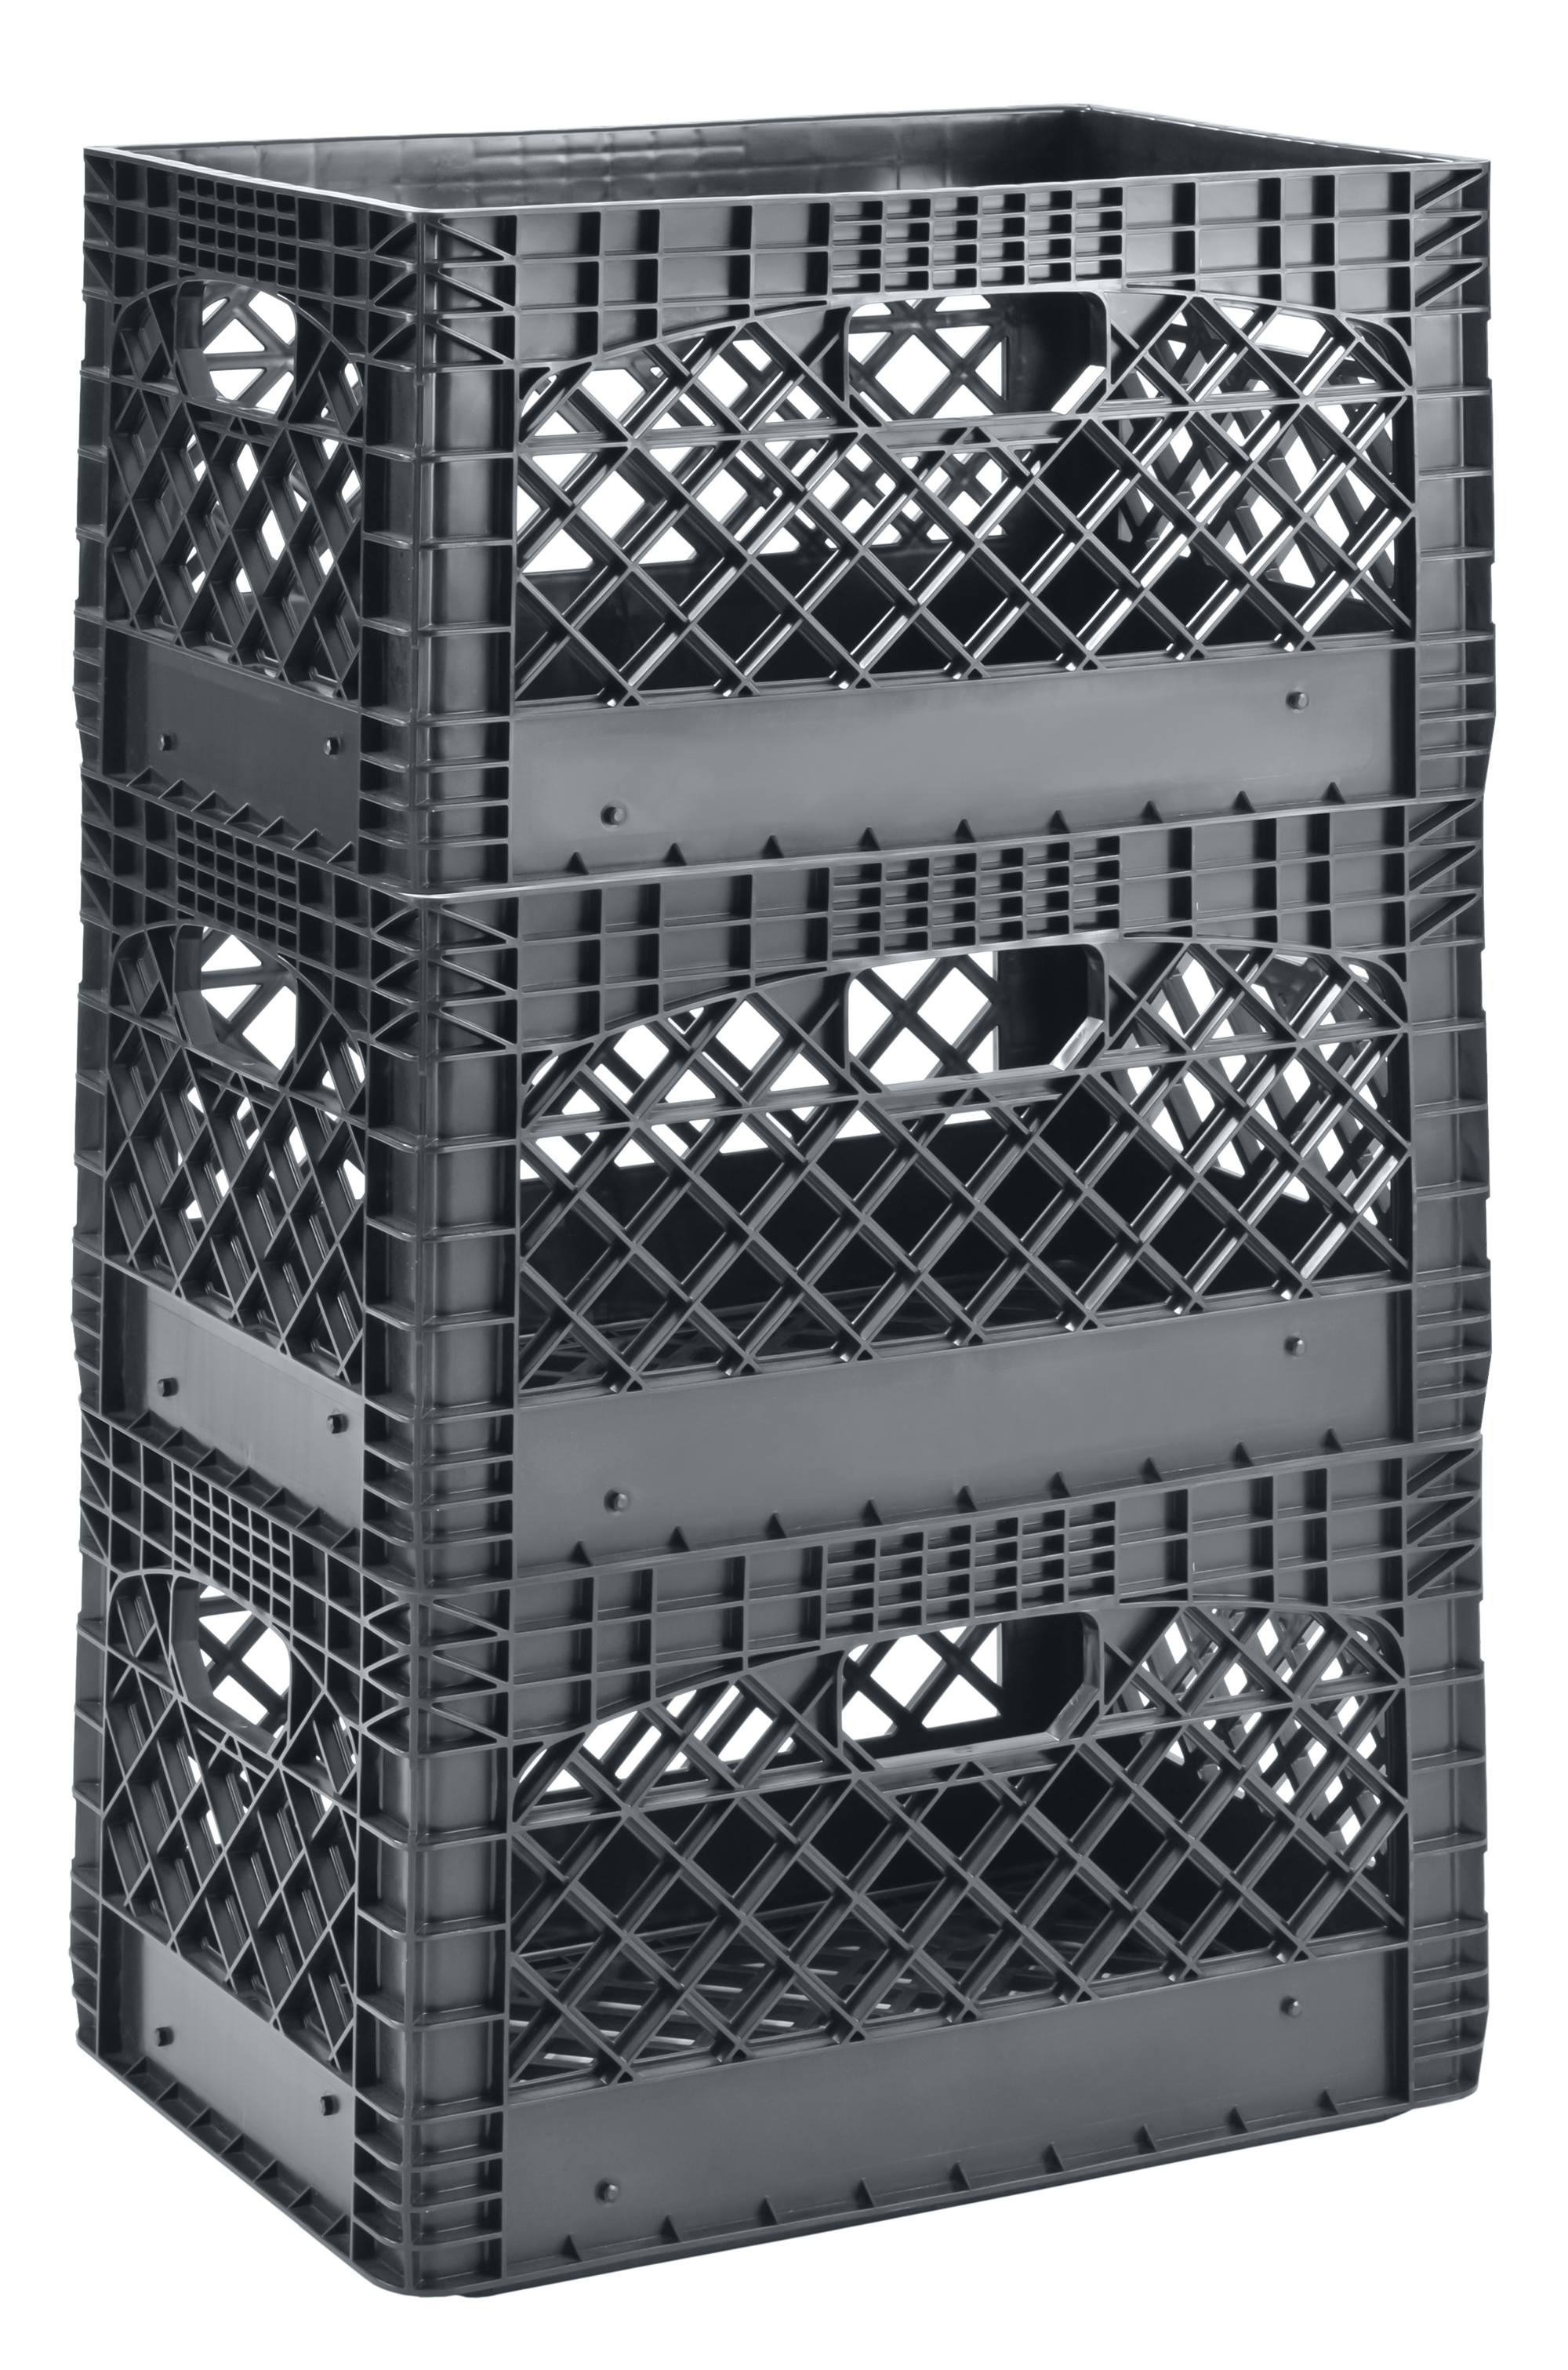 19 in. W x 11 in. H Stackable Plastic Milk Crate Bin in Graphite (3-Pack) - image 1 of 5